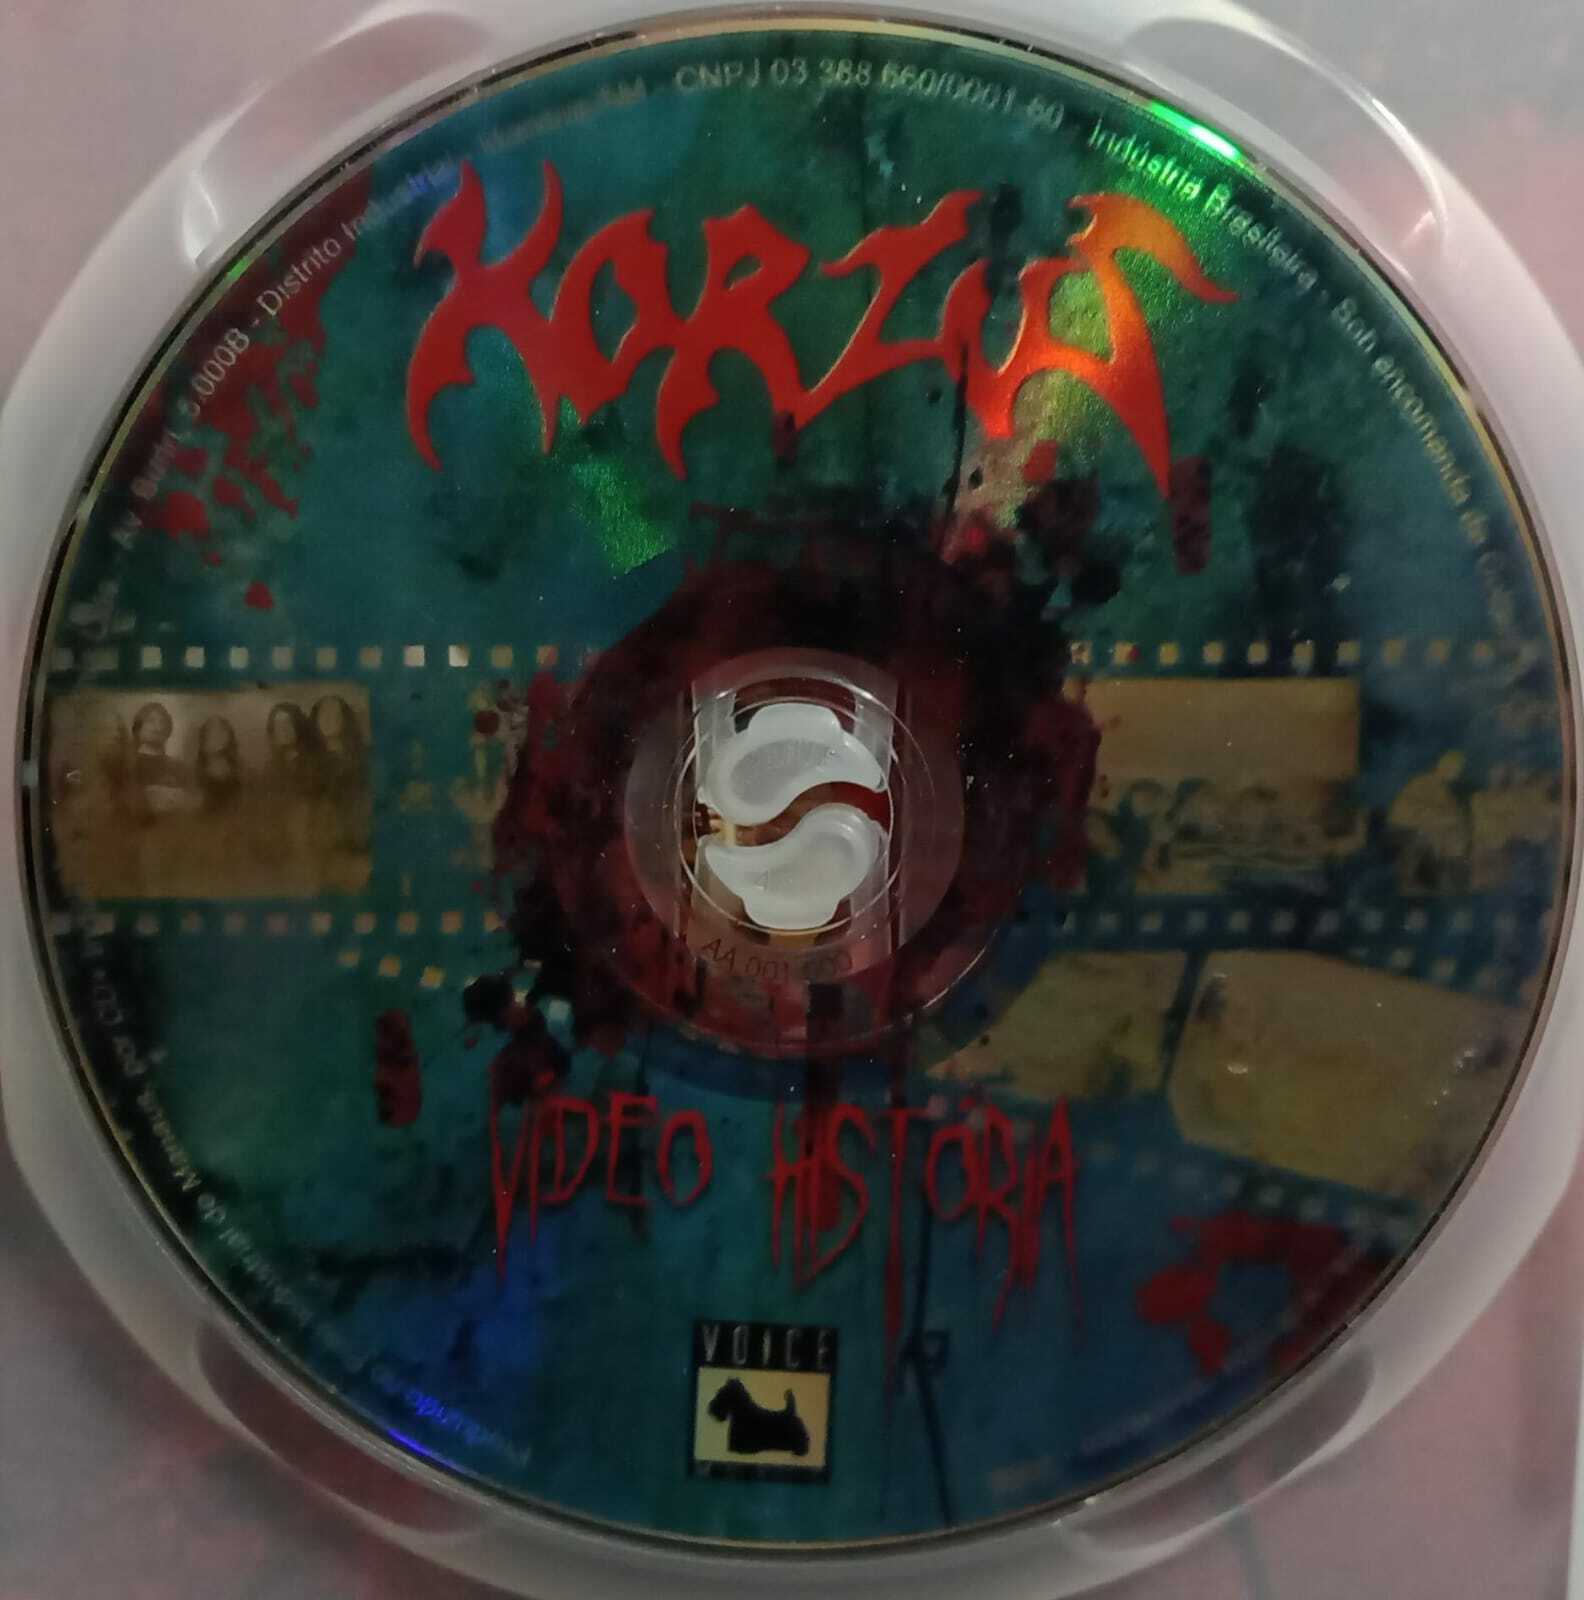 DVD - Korzus - Vídeo História